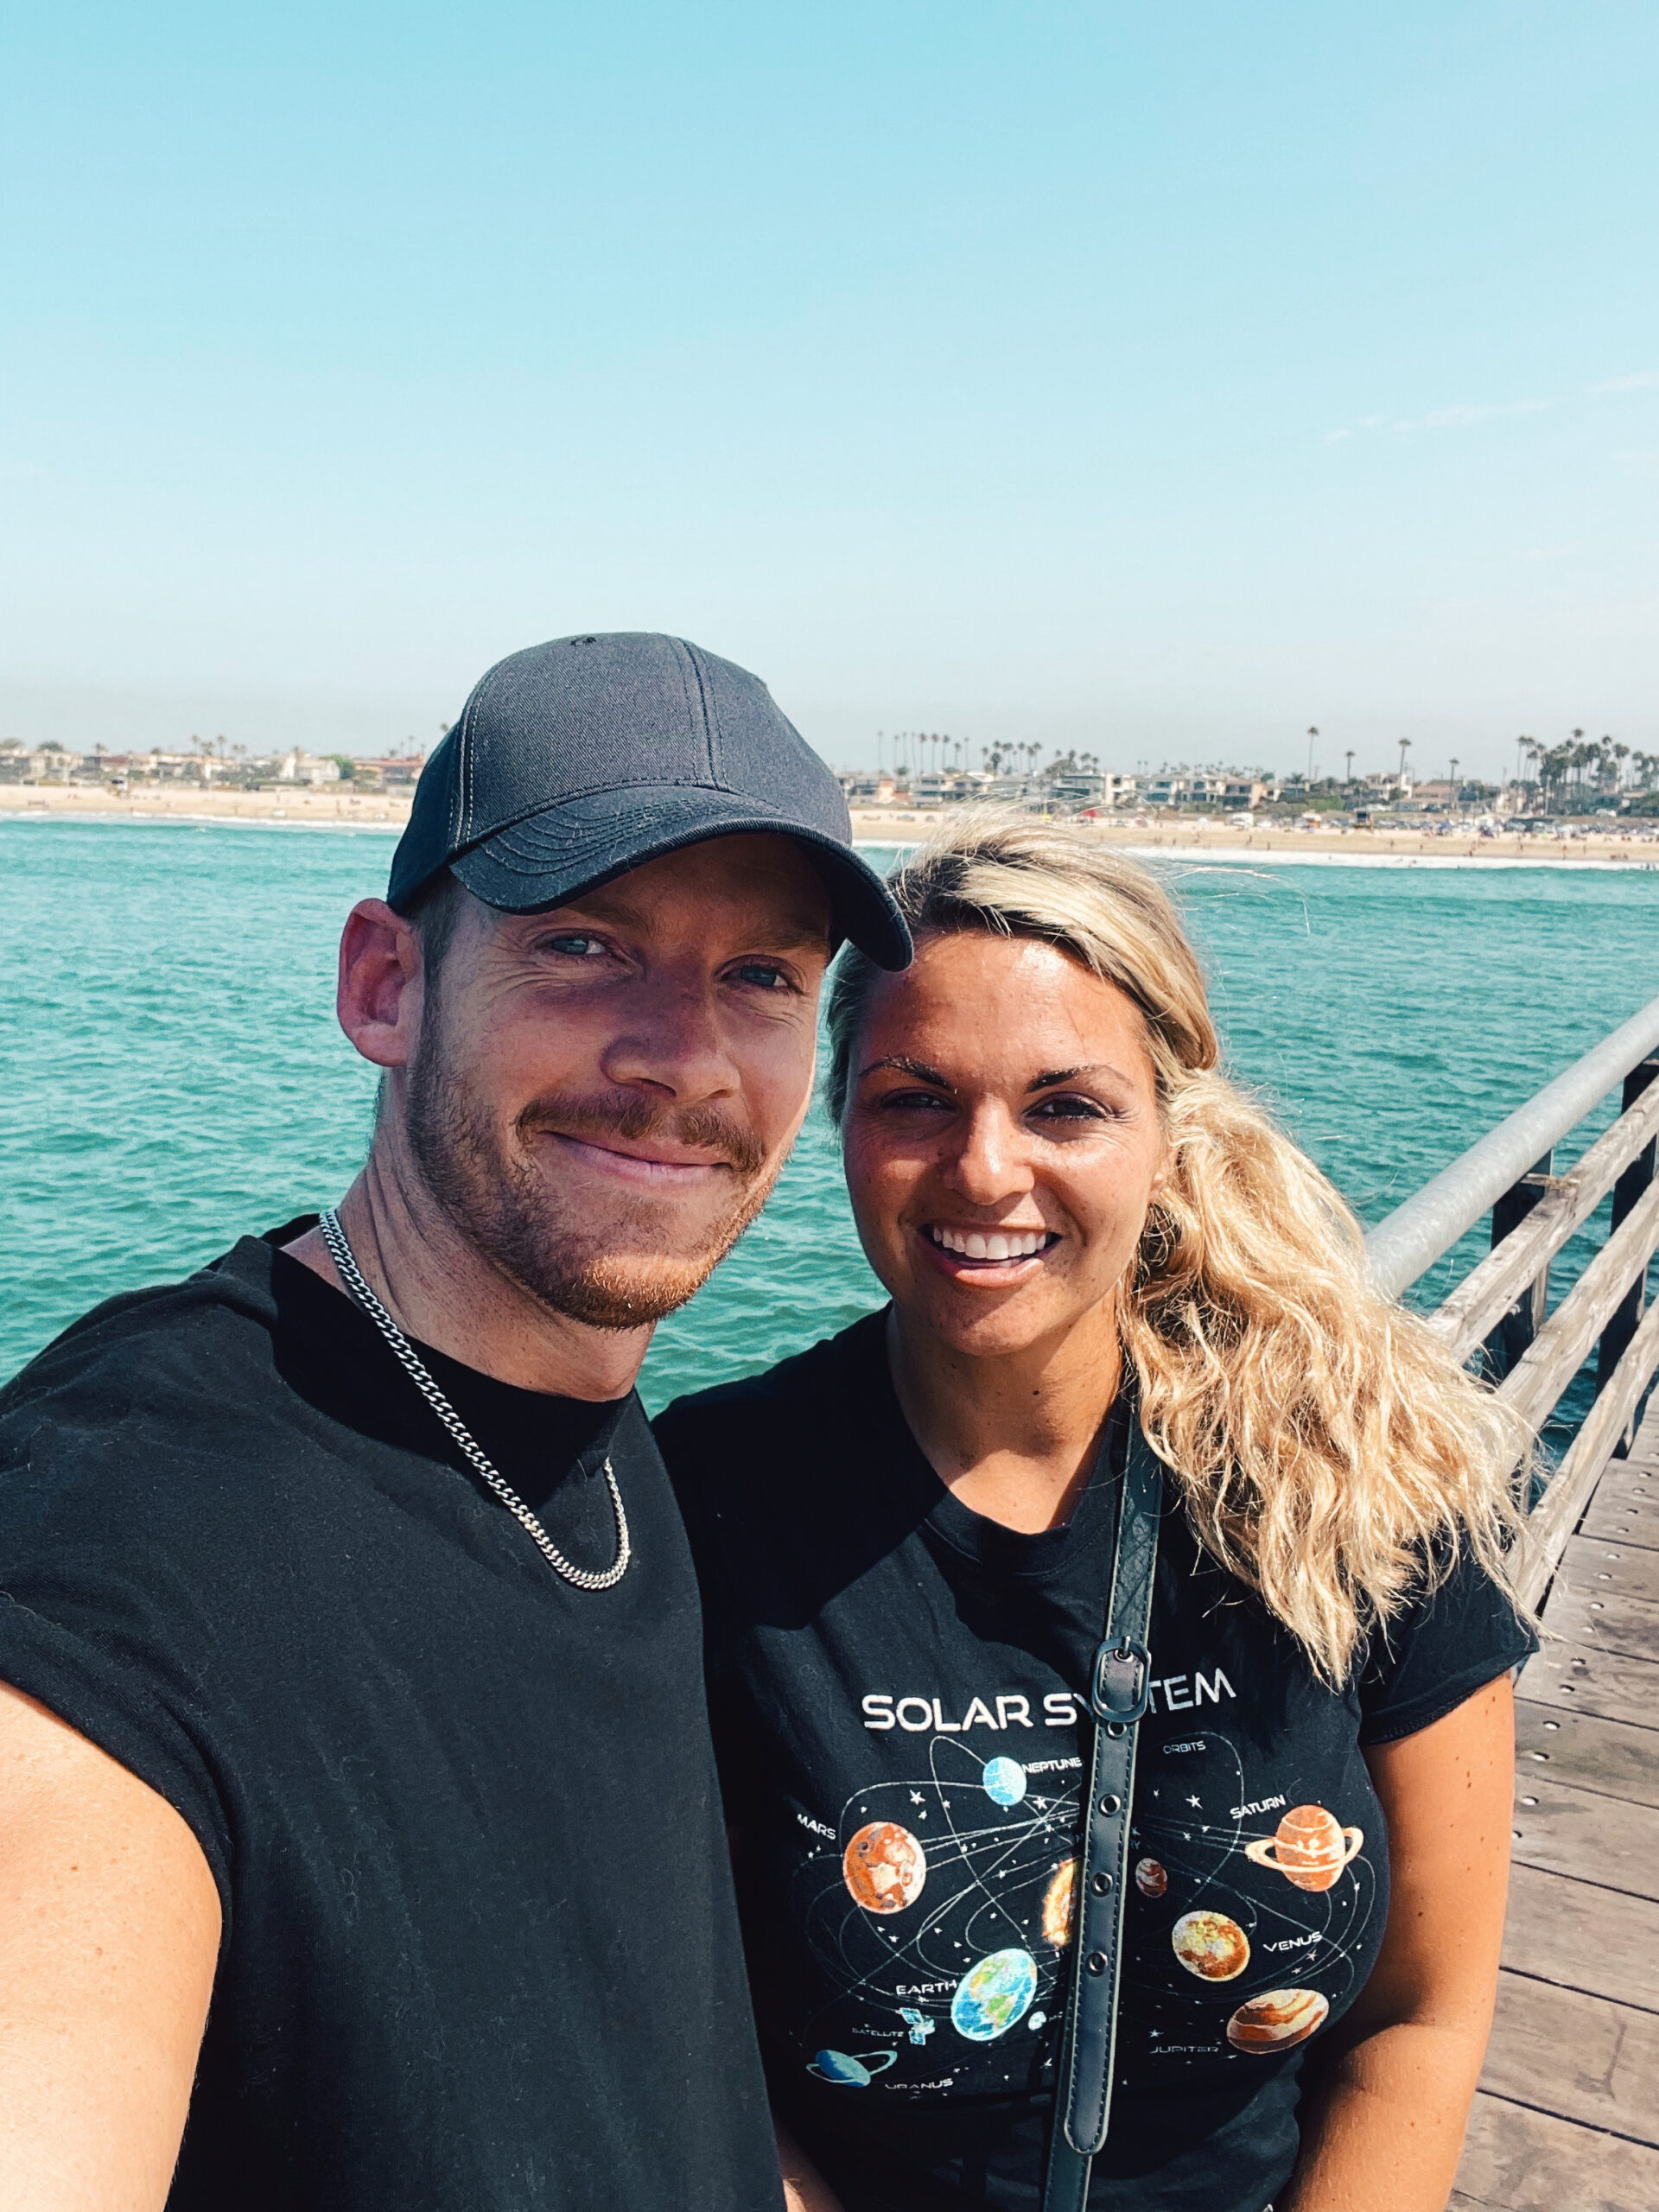 Couple on pier near ocean